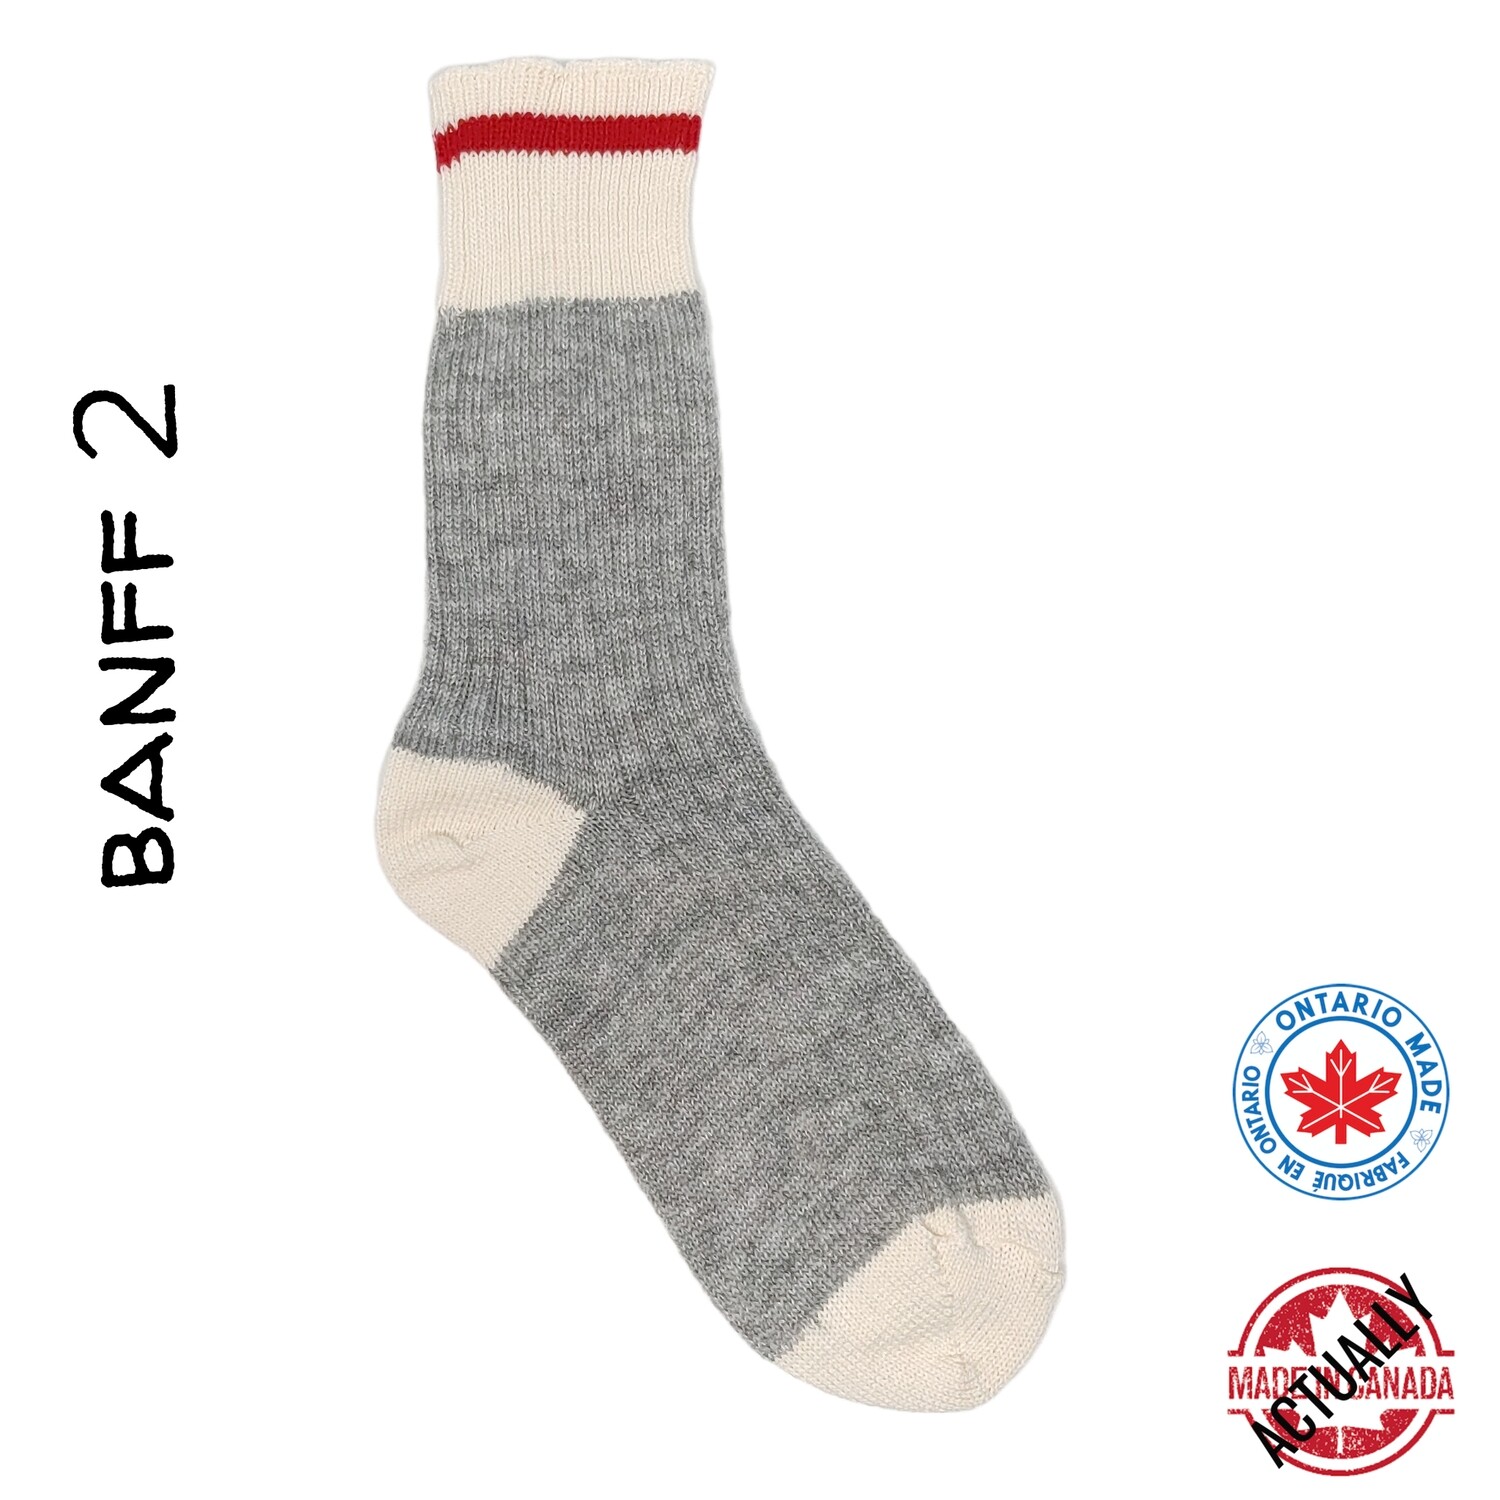 Banff 2 Wool Cabin Socks 2-pair pack Socks